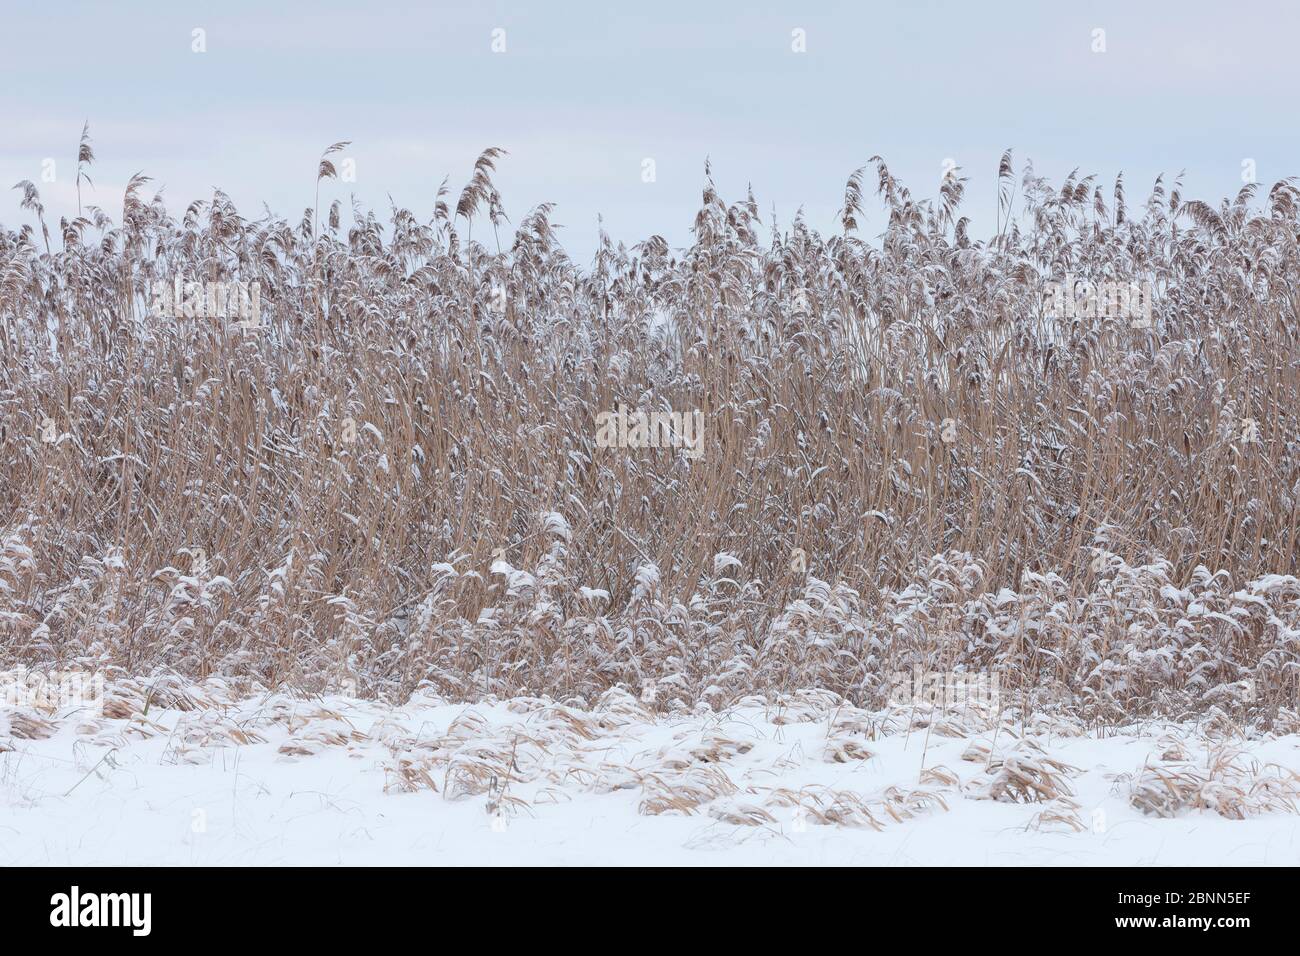 Lit Reed dans la neige et le gel, Allemagne, janvier. Banque D'Images